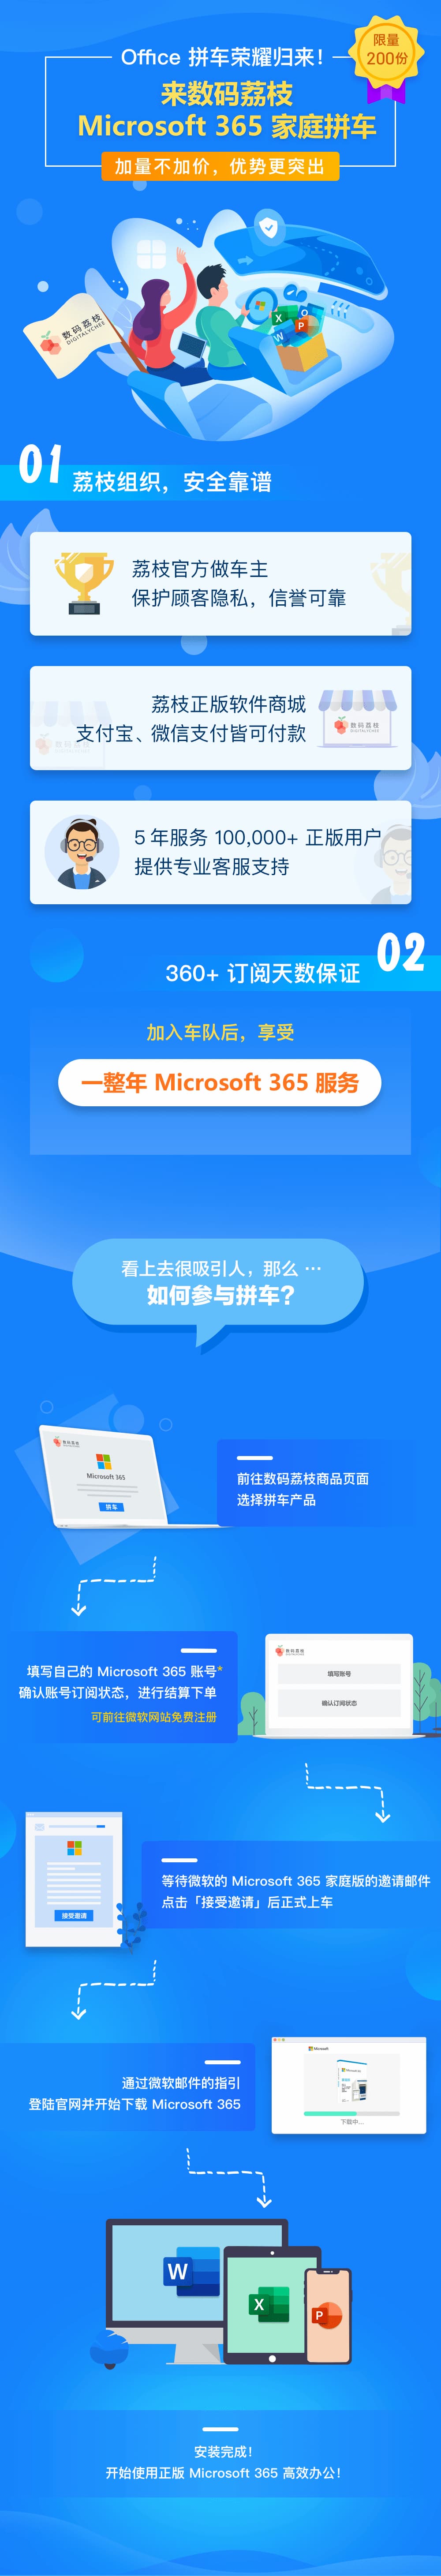 Microsoft 365 共享版，限量 200 份，全套 Office 套件与 1T OneDrive 享一年 4